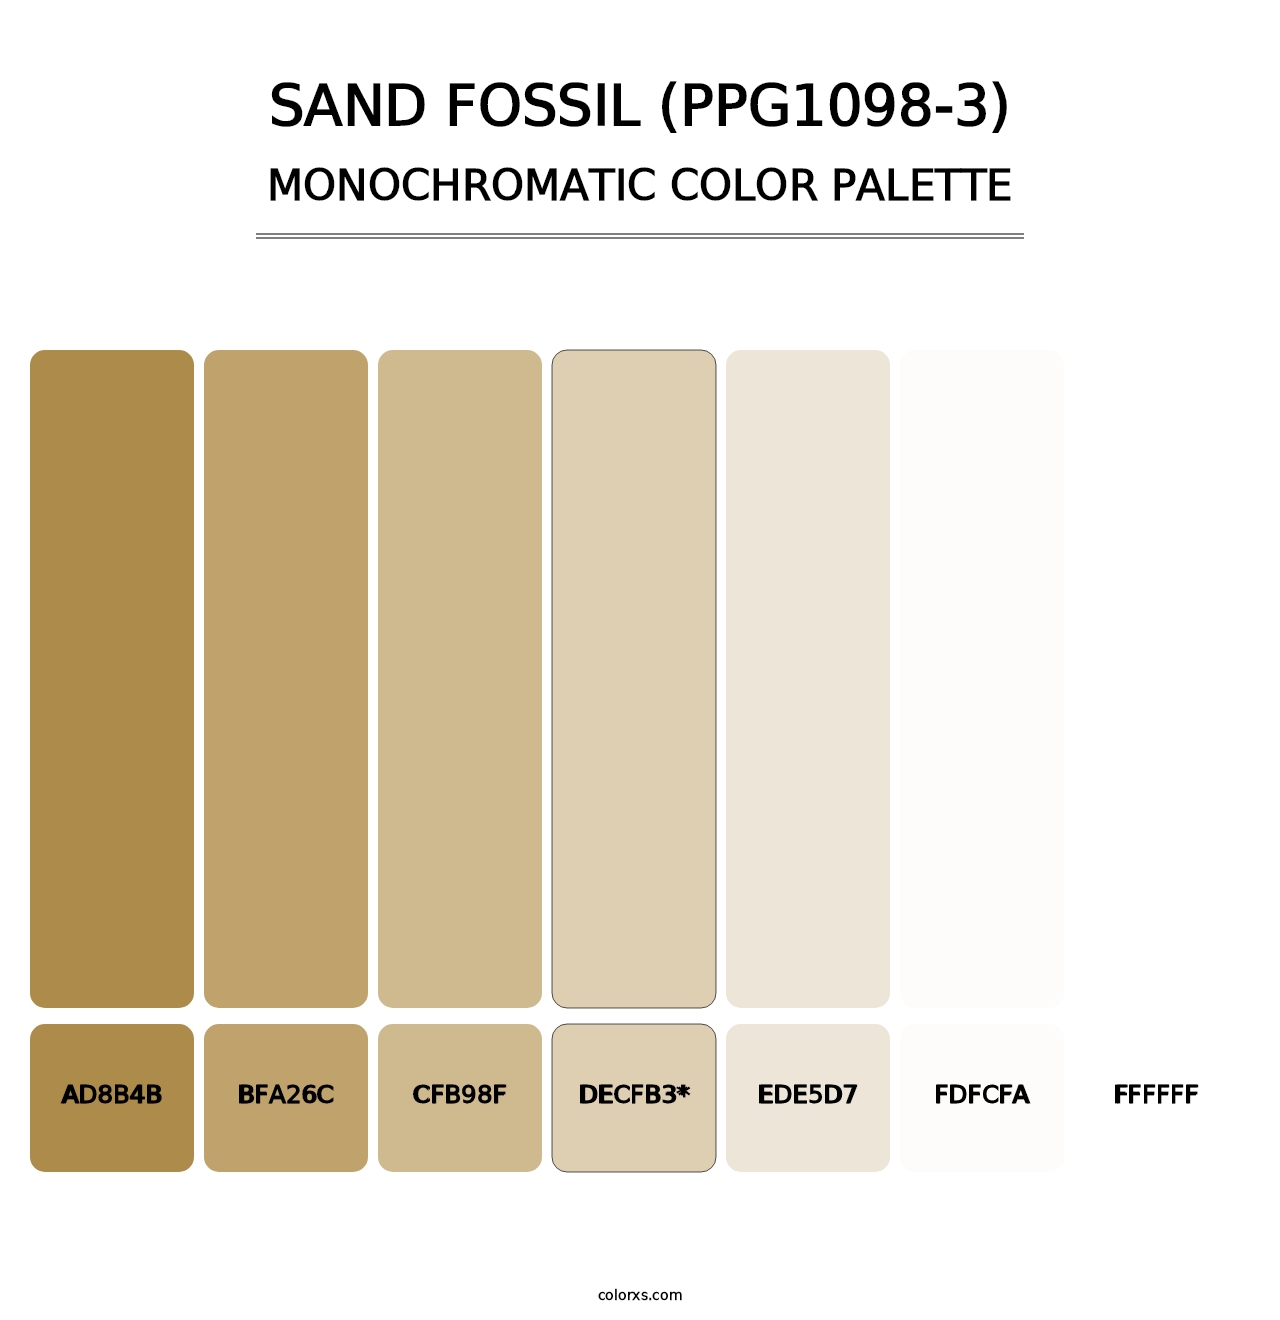 Sand Fossil (PPG1098-3) - Monochromatic Color Palette